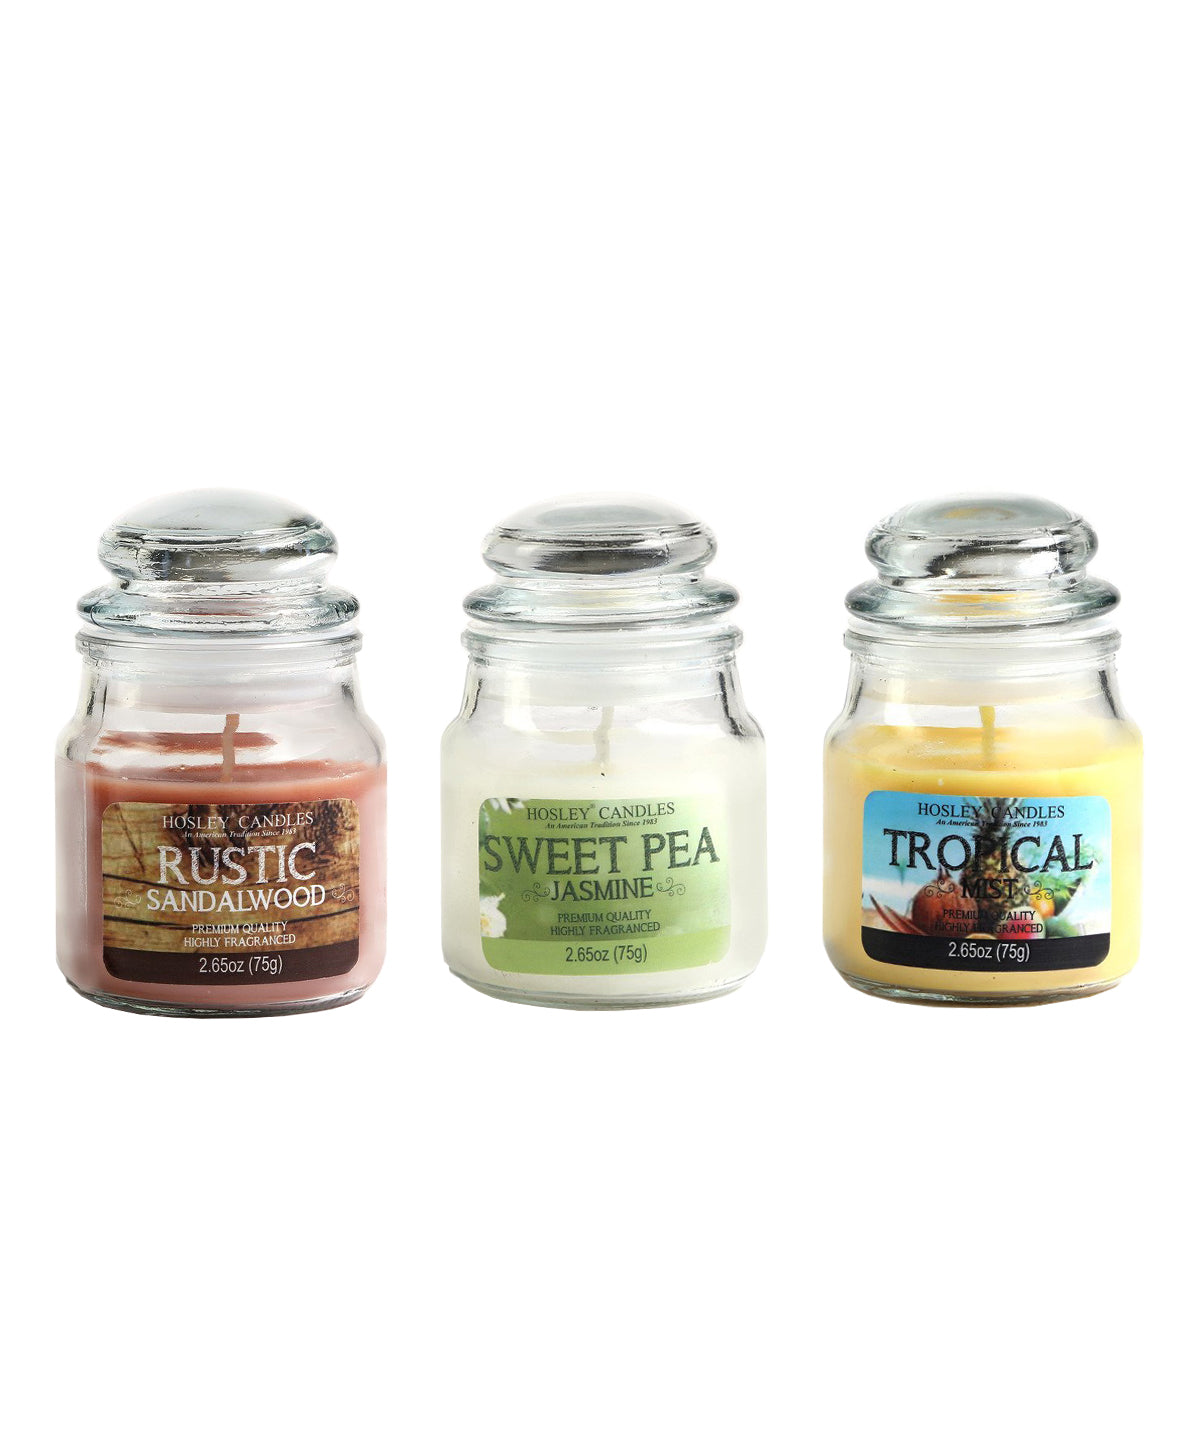 Hosley Set 3 Multicolor highly fragranced Jar Candle for Decoration/ Festive|Rustic Sandlewood| Jasmine| Tropical Mist